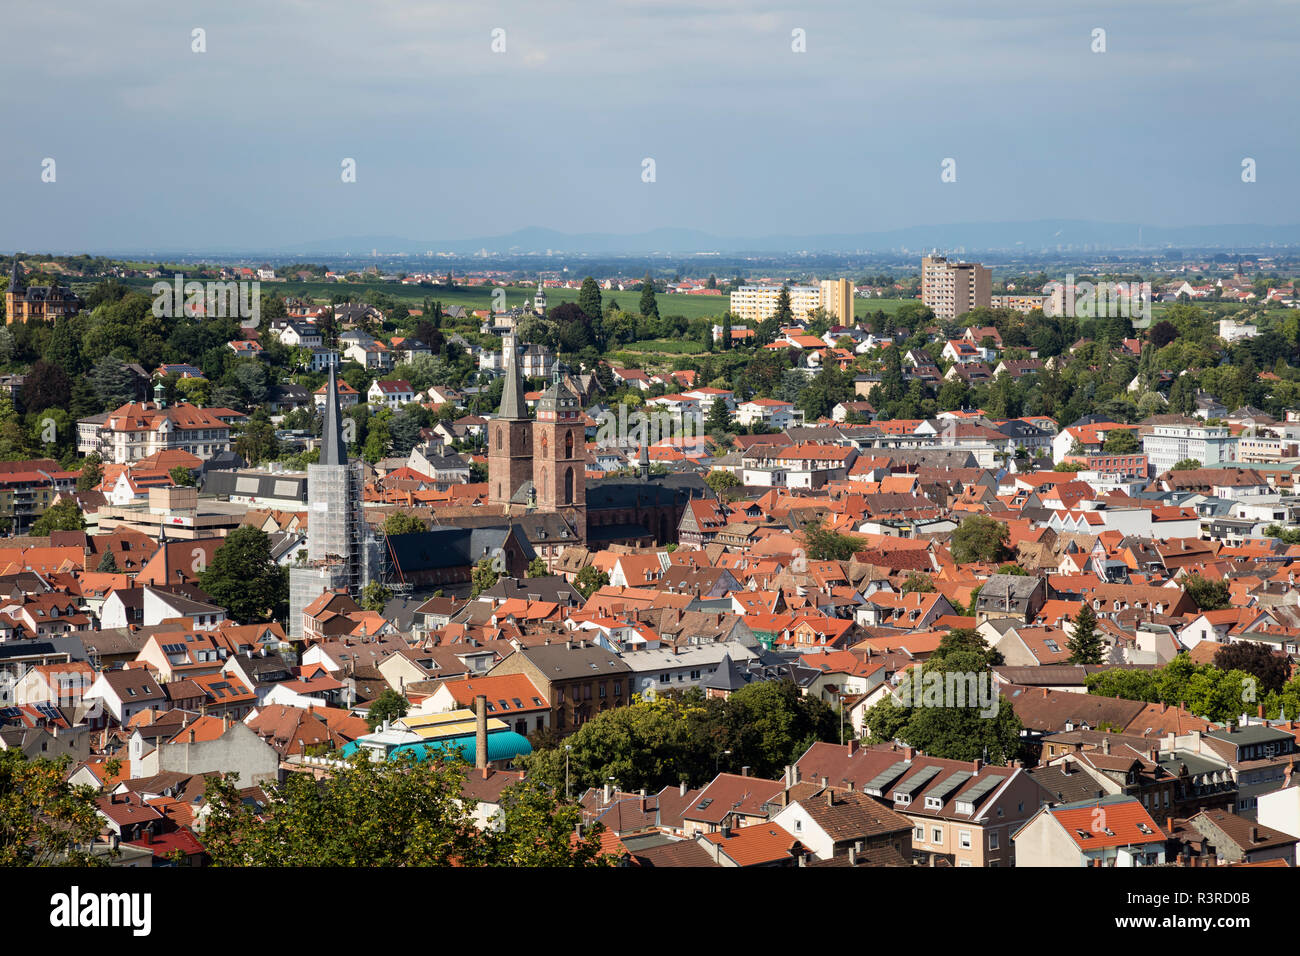 Germany, Rhineland-Palatinate, Neustadt an der Weinstrasse, townscape Stock Photo